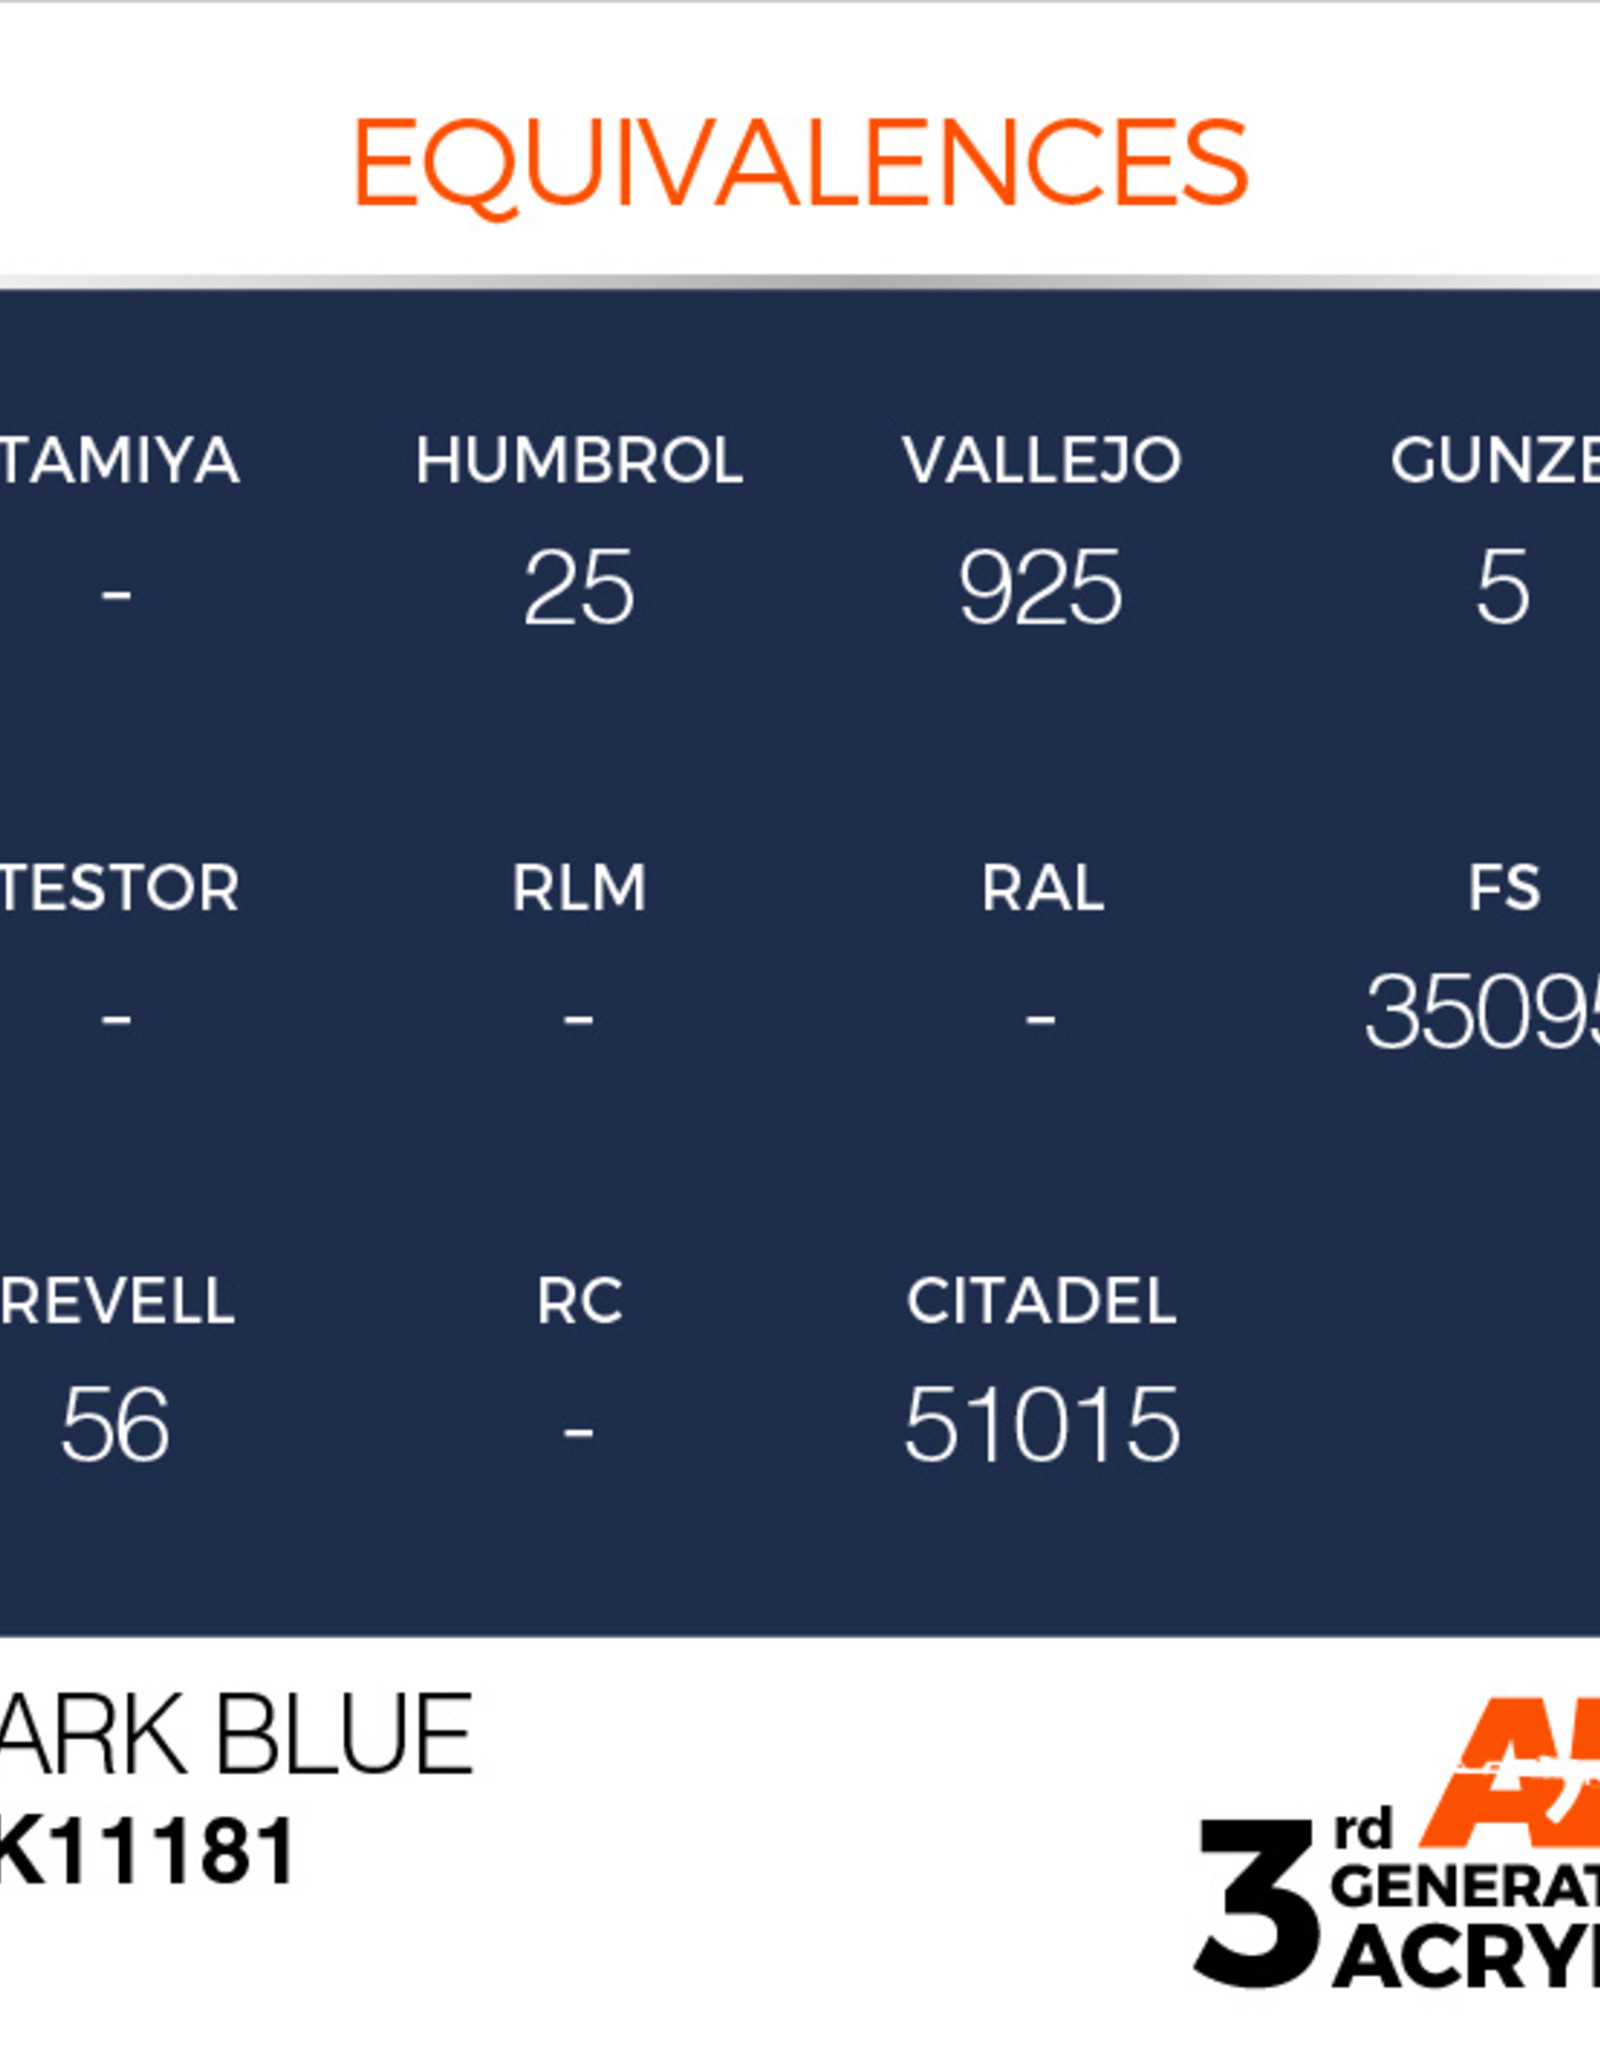 AK Interactive AK 3rd Gen Acrylics: Dark Blue (17ml)